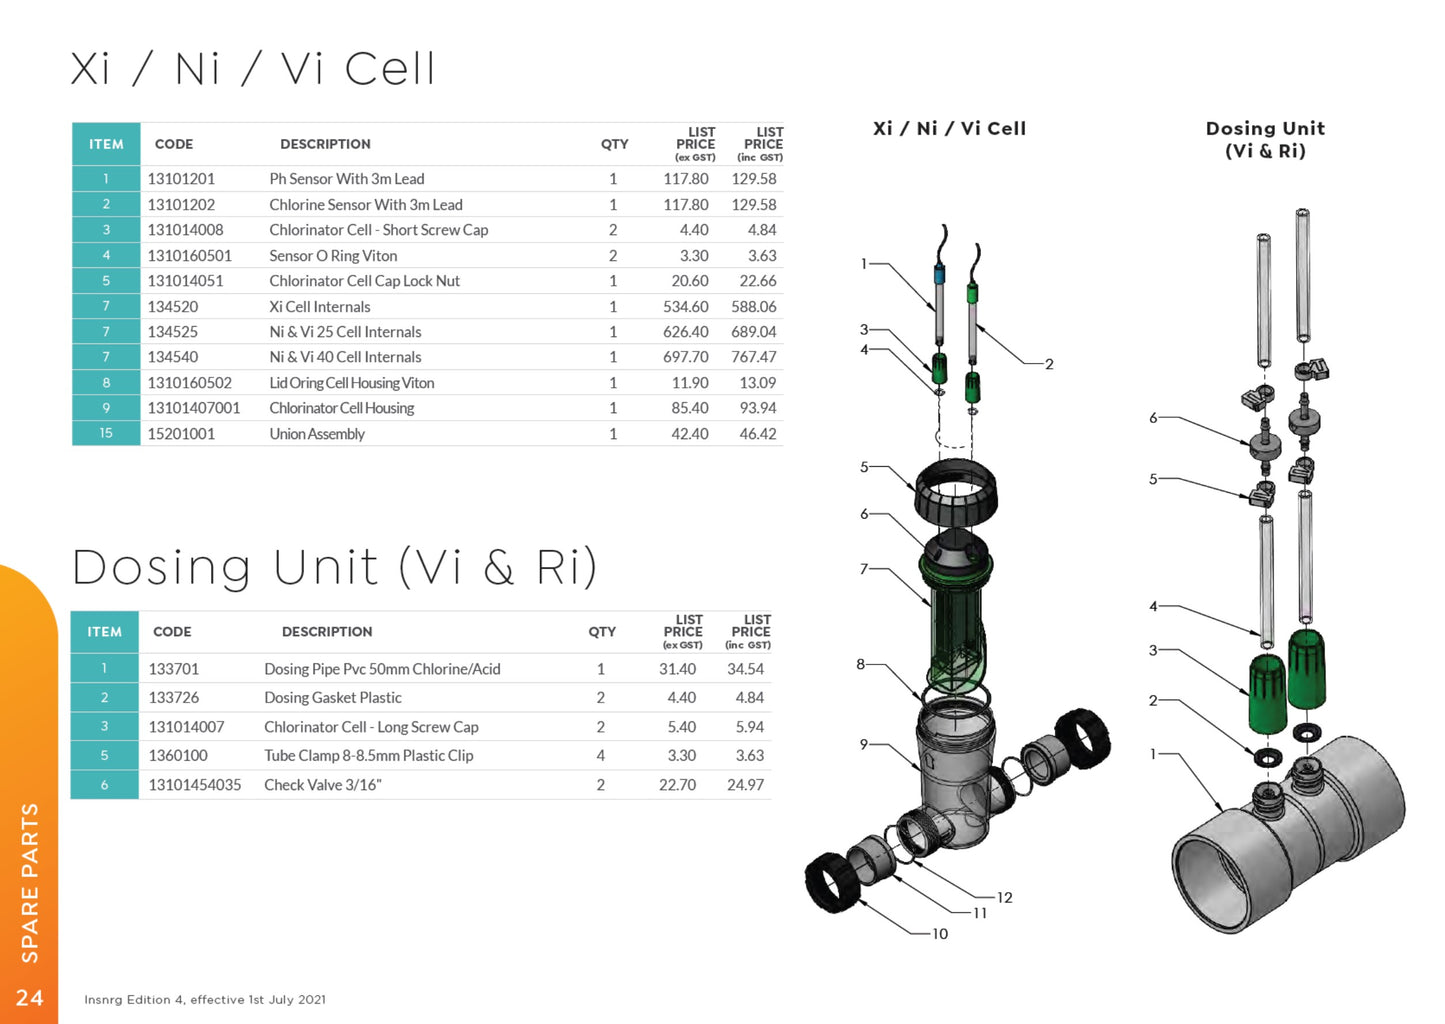 40g Chlorinator Cell Complete - Insnrg Ni & Vi Chlorinators (Ni40/Vi40) [13235040, Barcode 04220208]